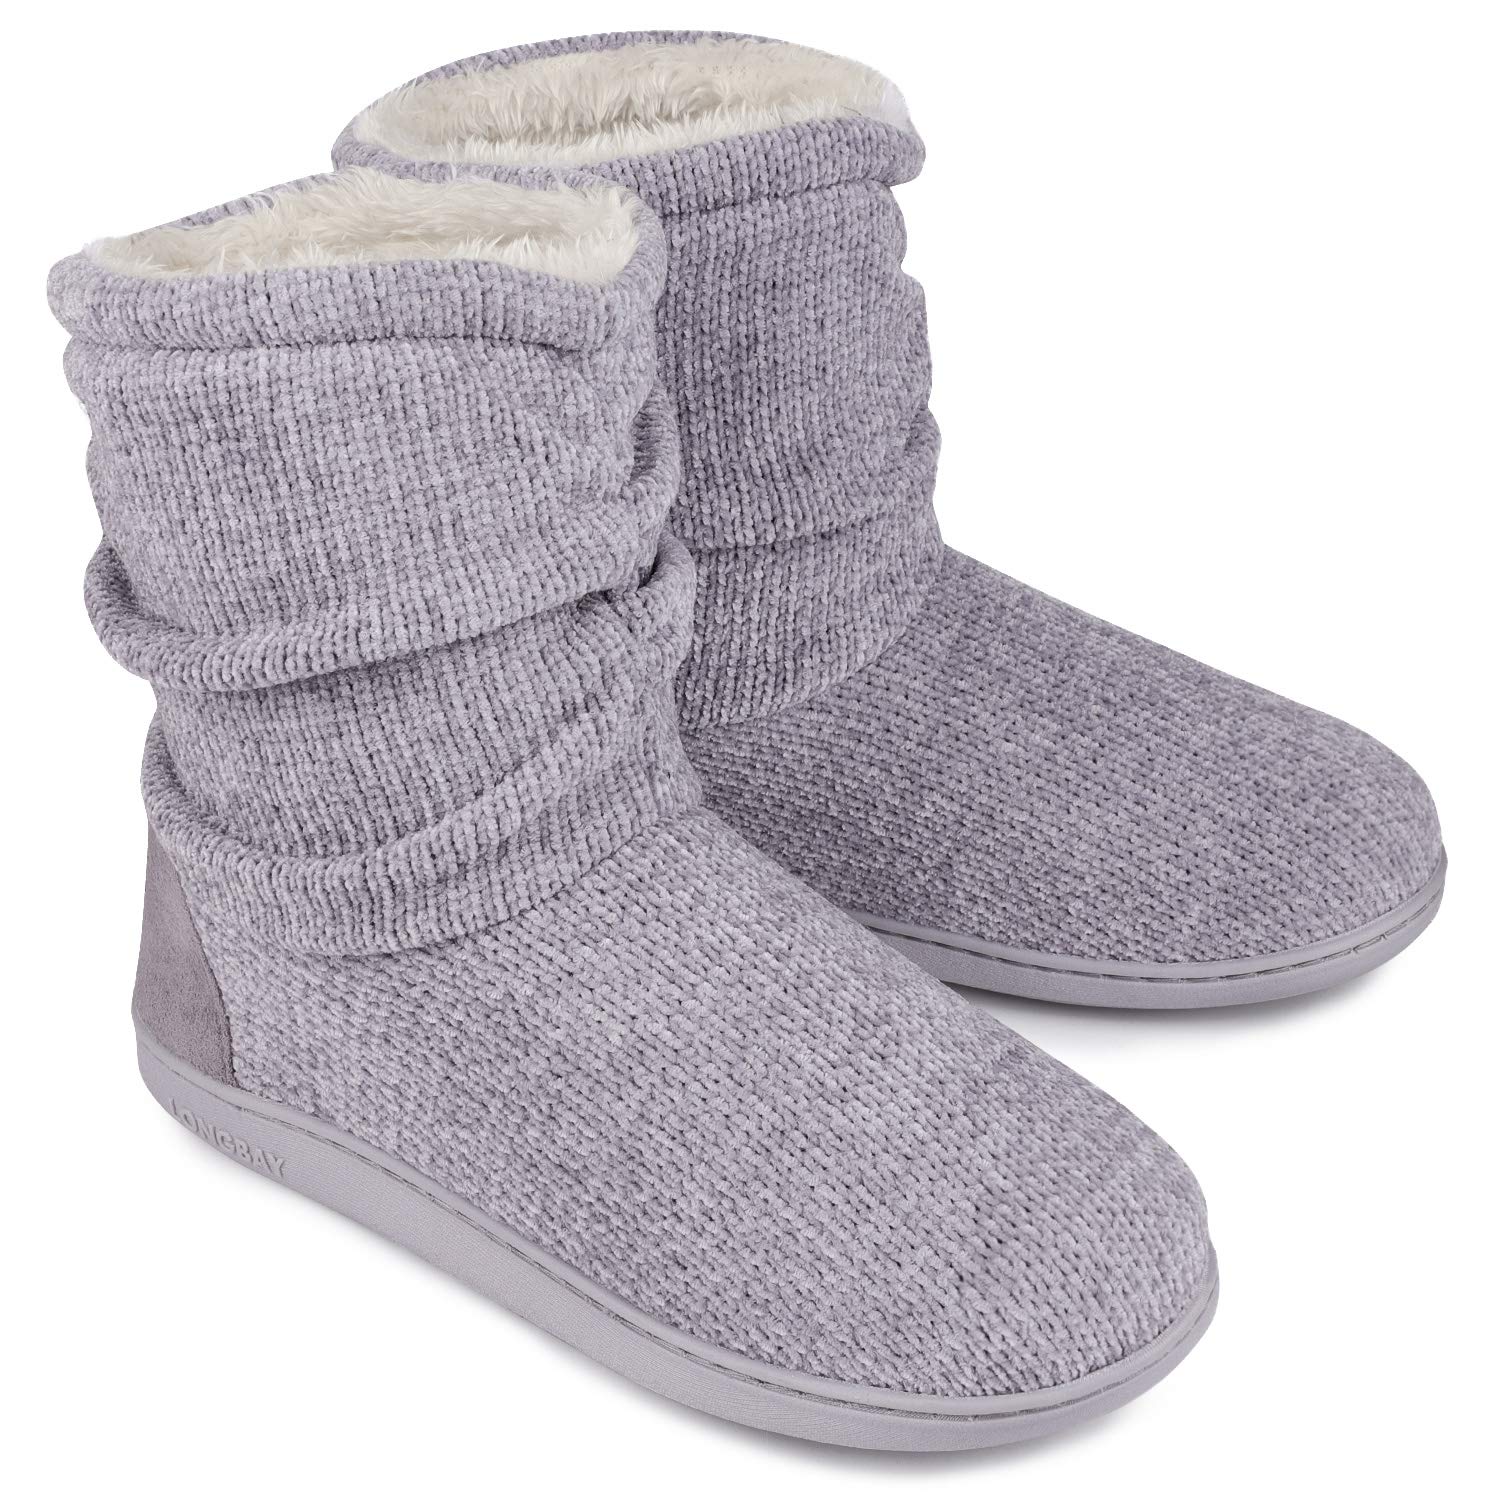 Buy LongBay Ladies' Chenille Knit Warm Boots Slippers Soft Plush Fleece ...